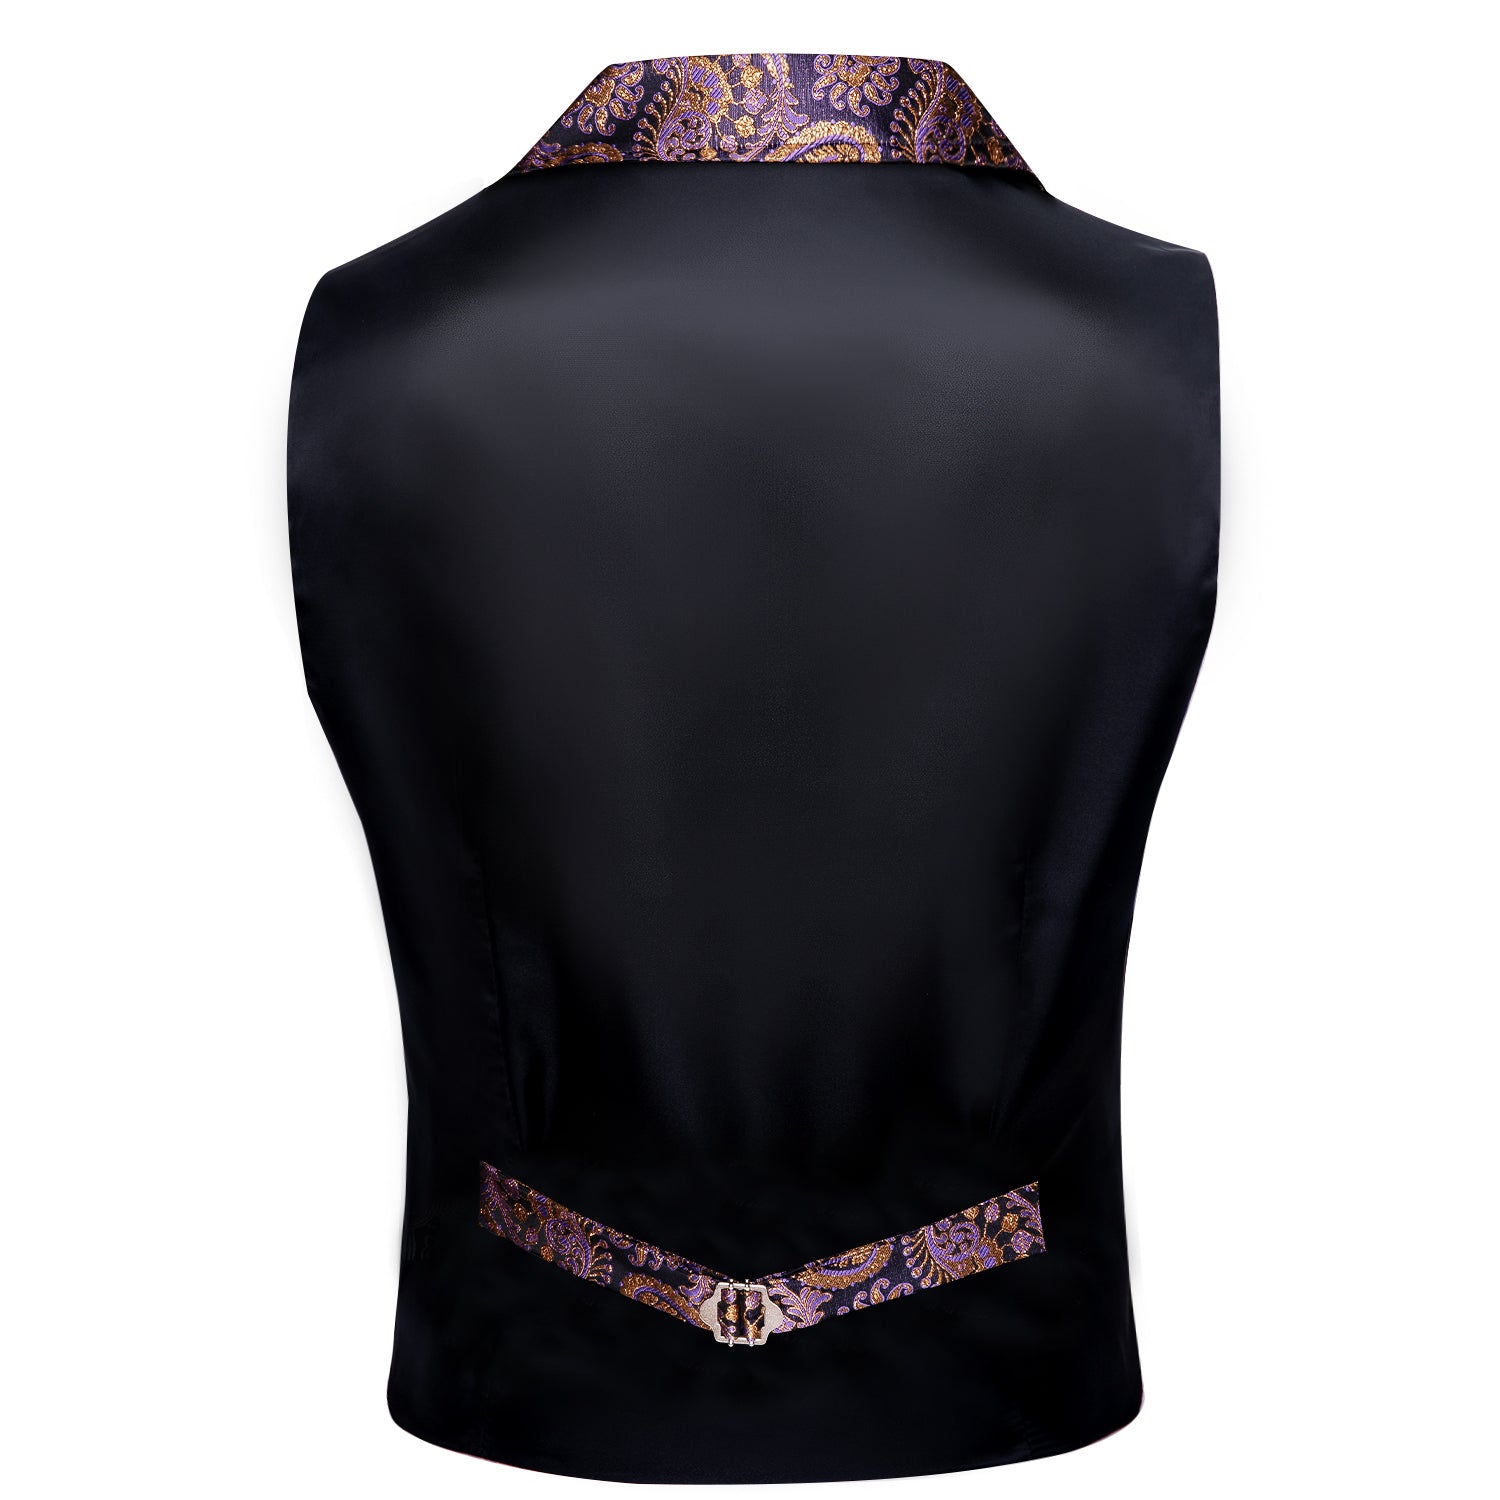 Luxury Men's Novelty Purple Blue Paisley Silk Vest